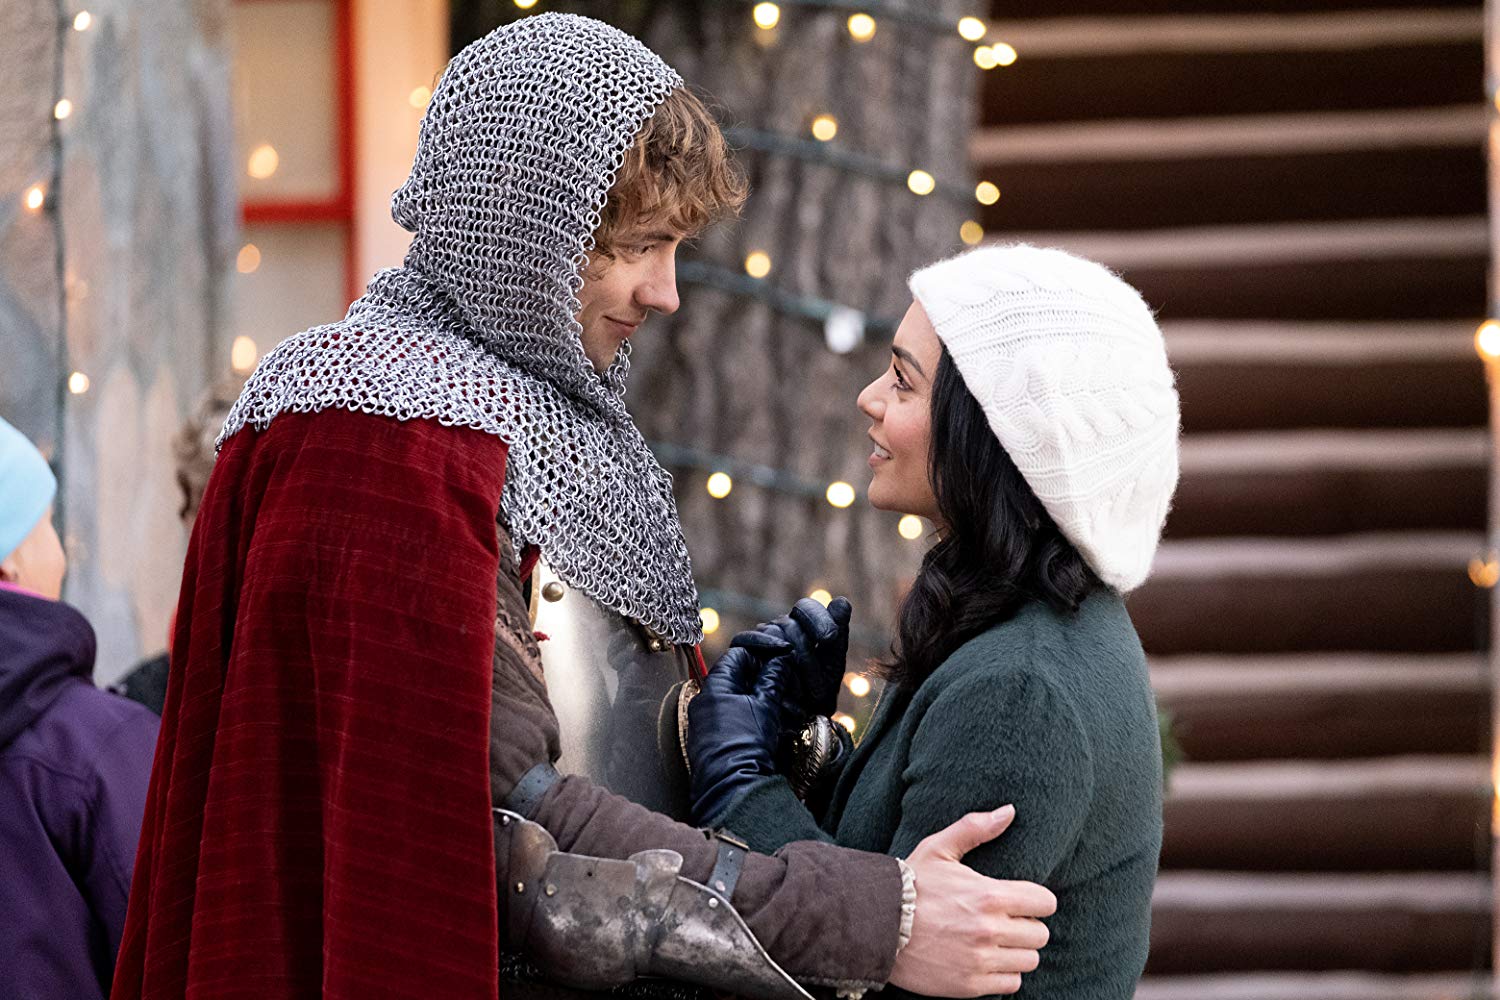 El Caballero de la Navidad (2019): Romance Navideño en Netflix